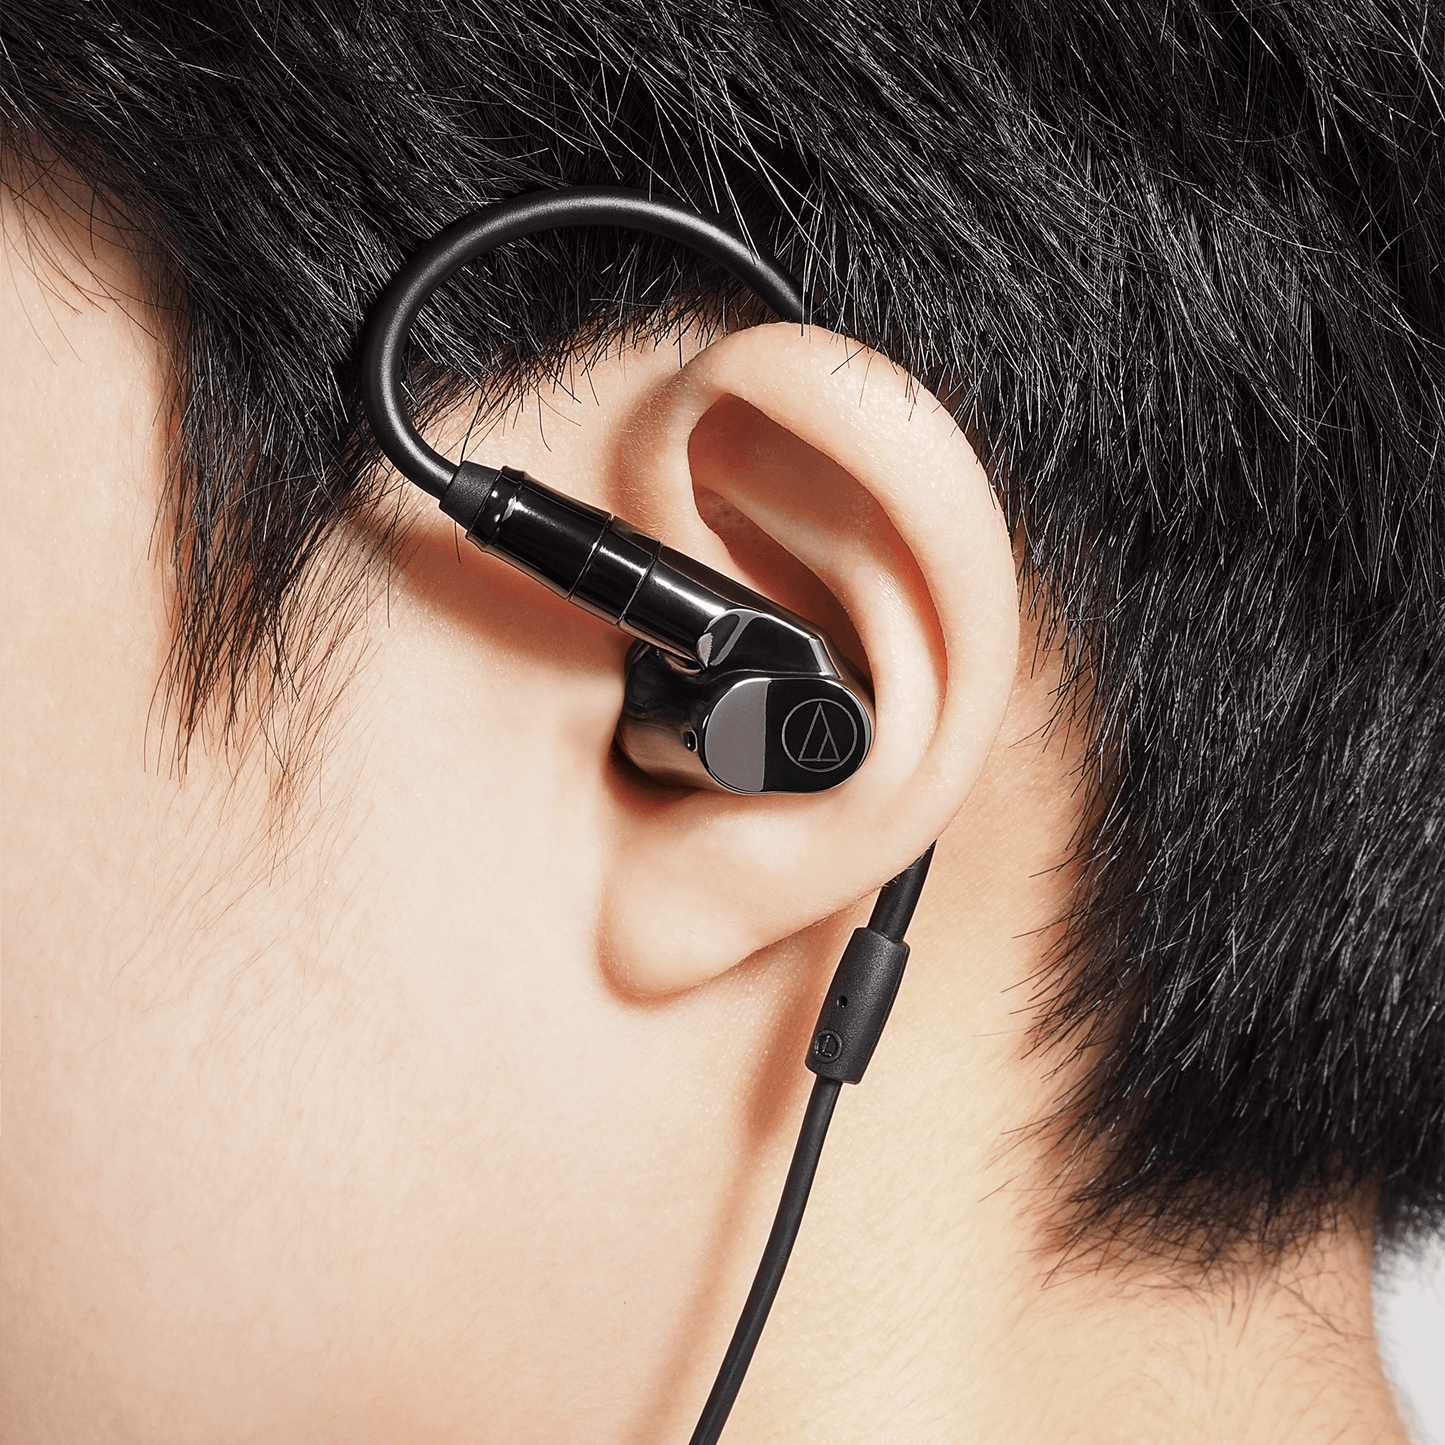 Audio-Technica ATH-IEX1 Hi-Res In-Ear Headphones